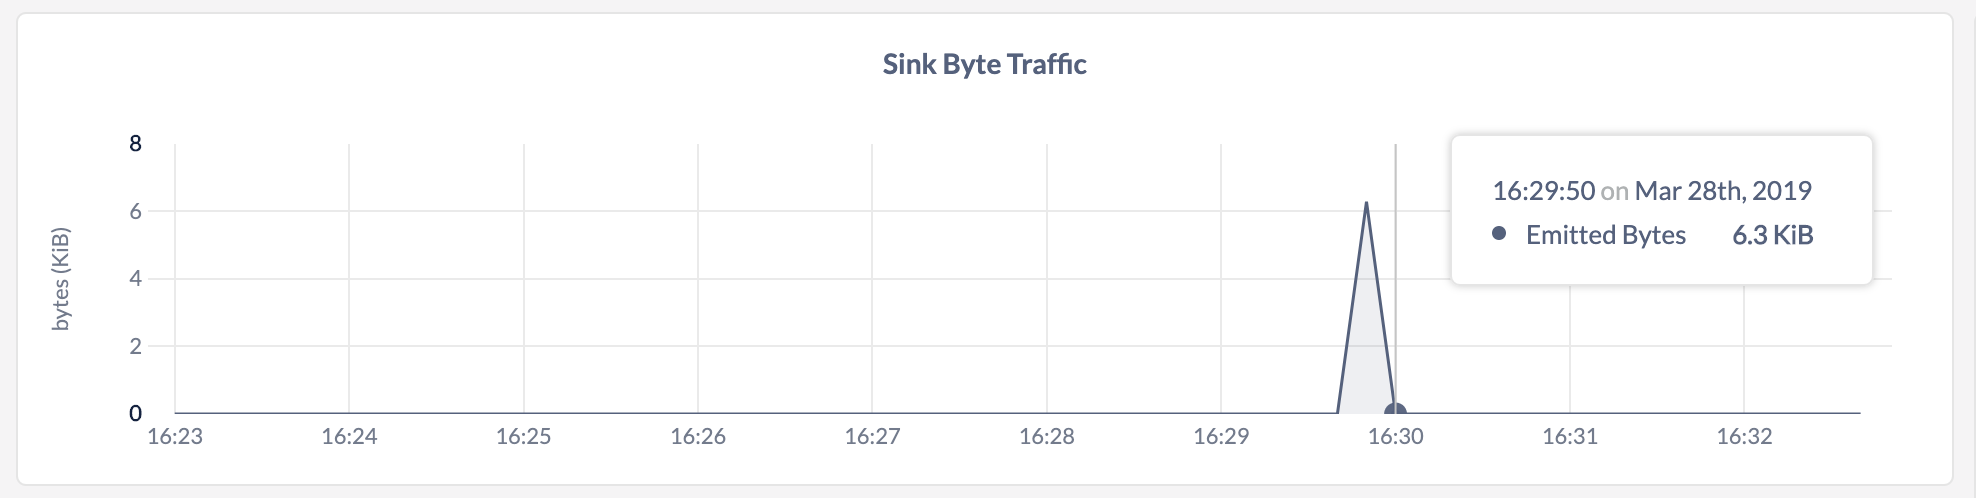 DB Console Sink Byte Traffic graph